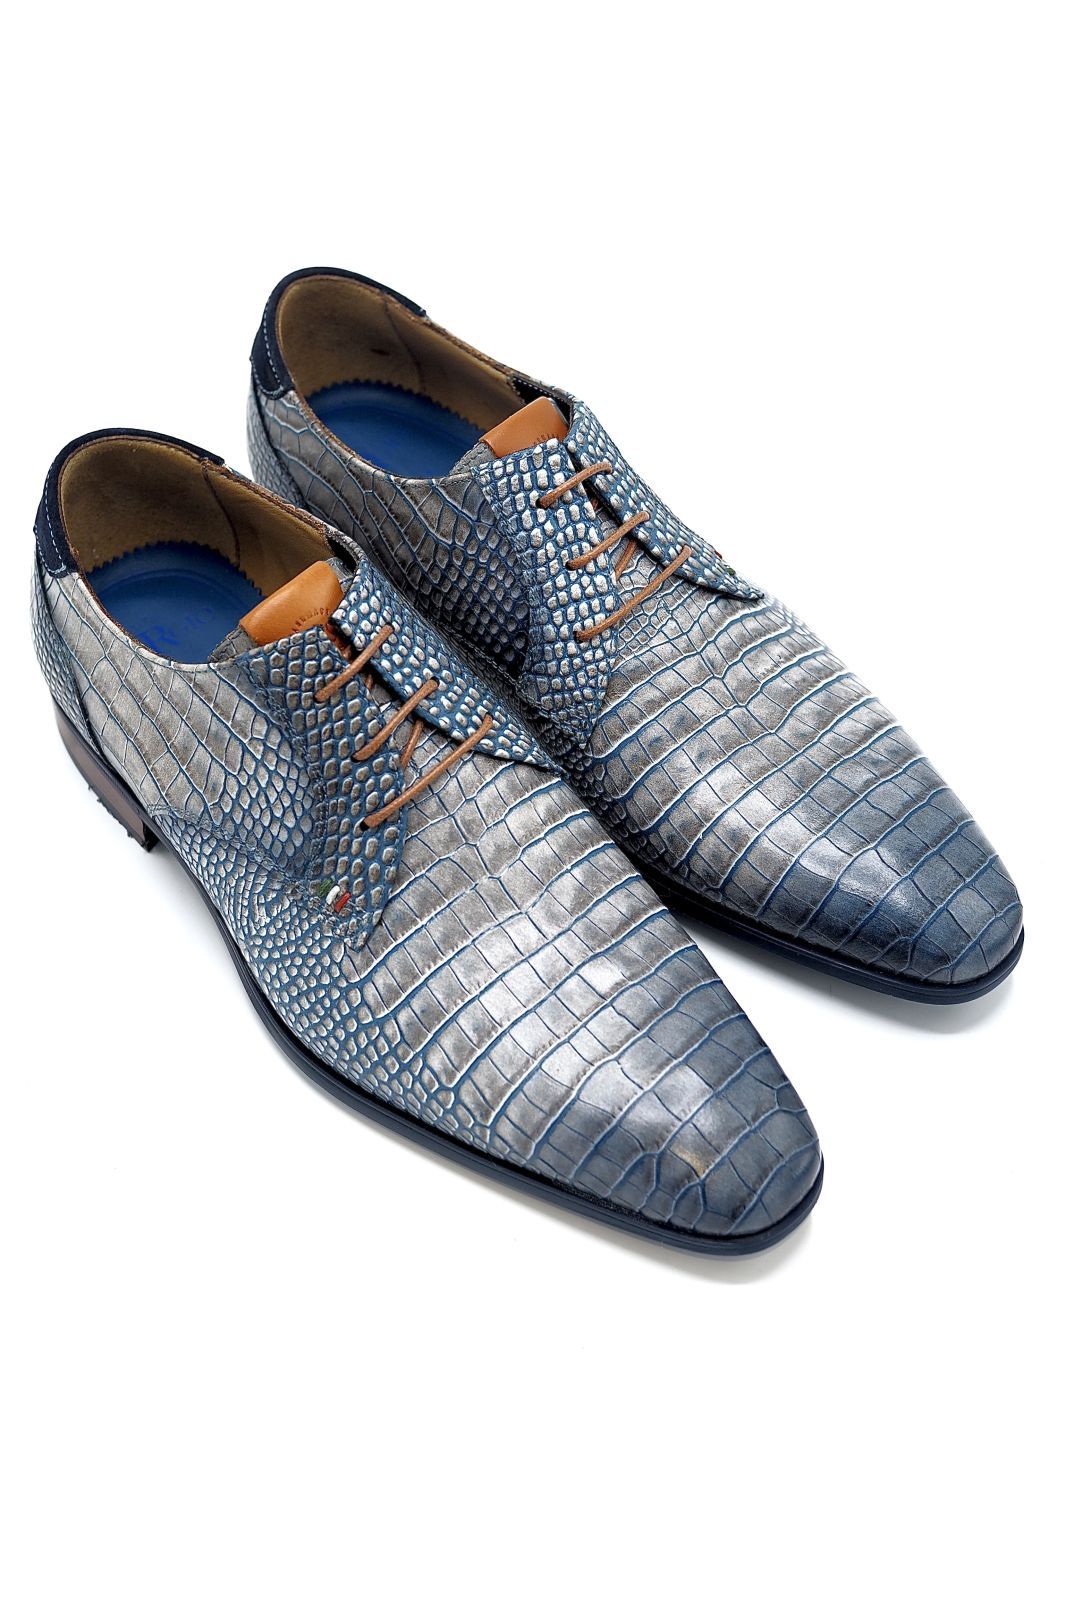 Giorgio 1958 molière Bleu hommes (GG1958-Classic lacet - 964145 classic crocco BLU) - Marine | Much more than shoes